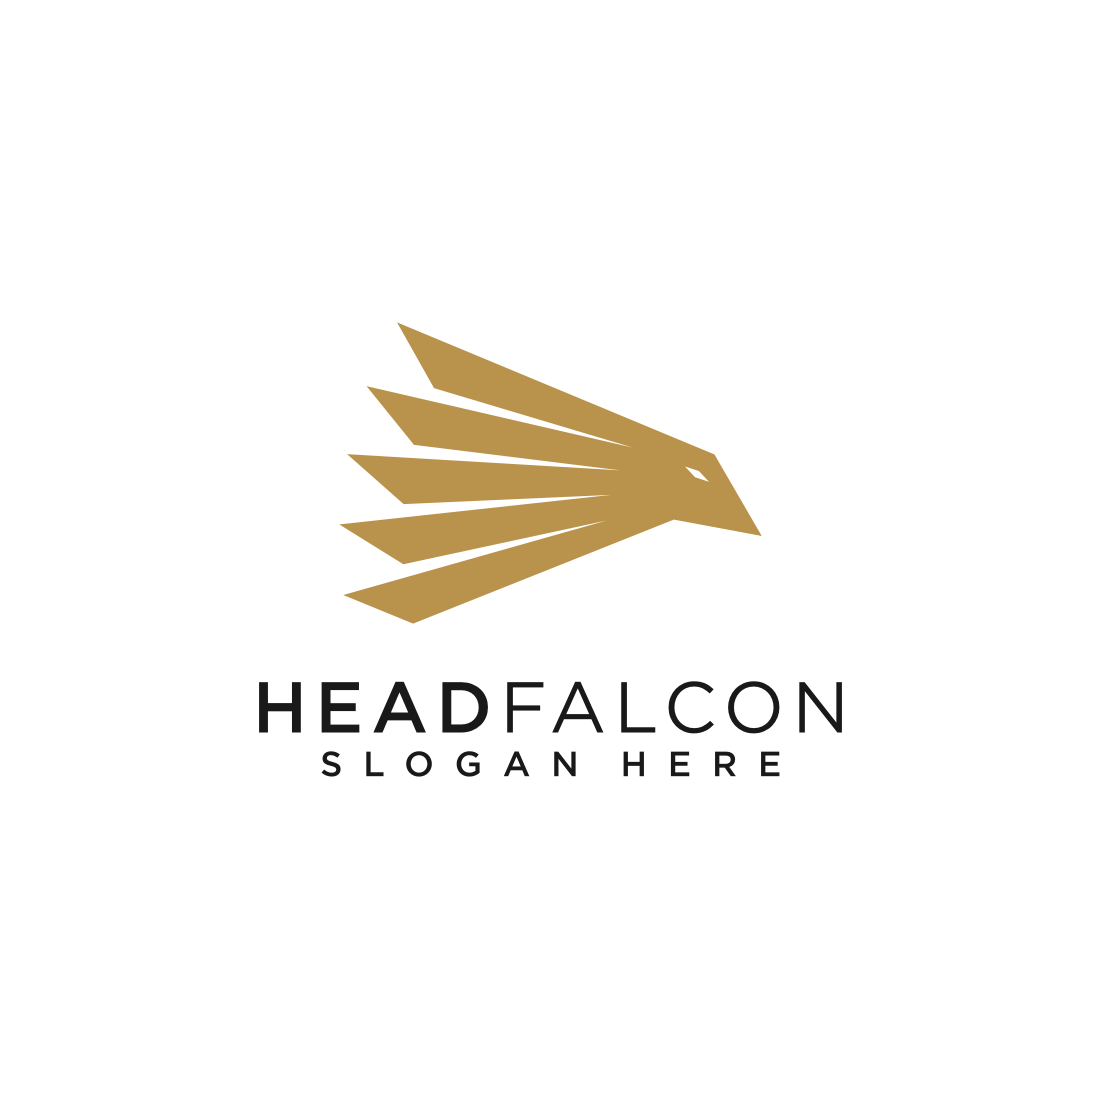 eagle head logo vector cover image.